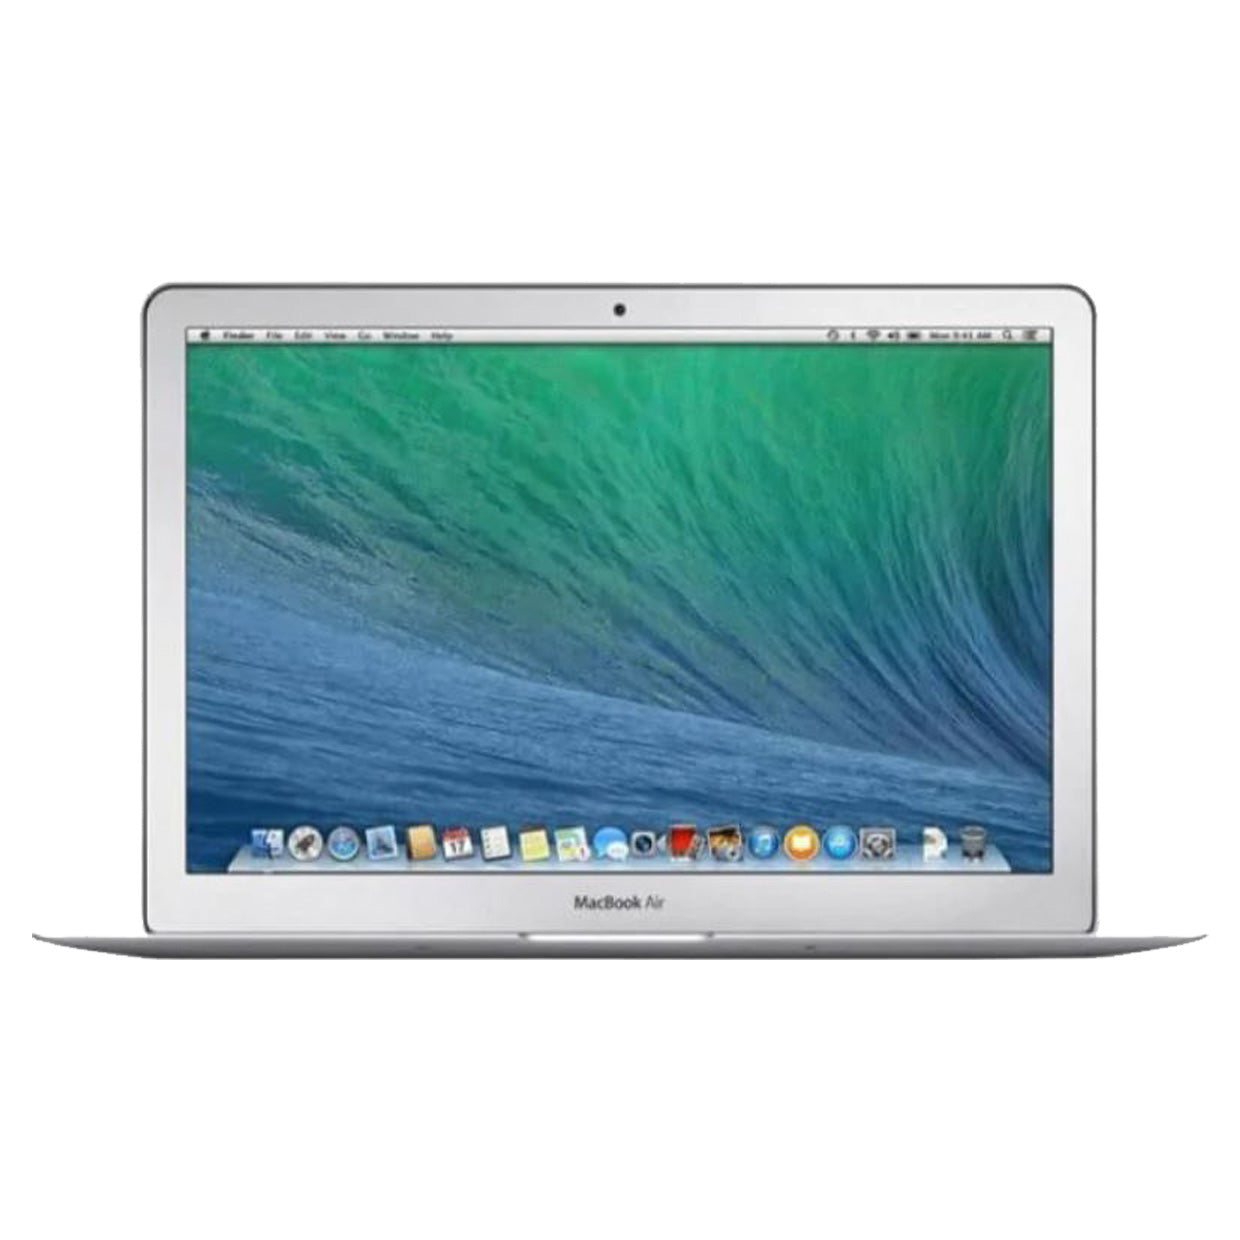 Apple MacBook A1466,2015, i5 8GB 256 SSD Silver, 720p FaceTime HD Camera